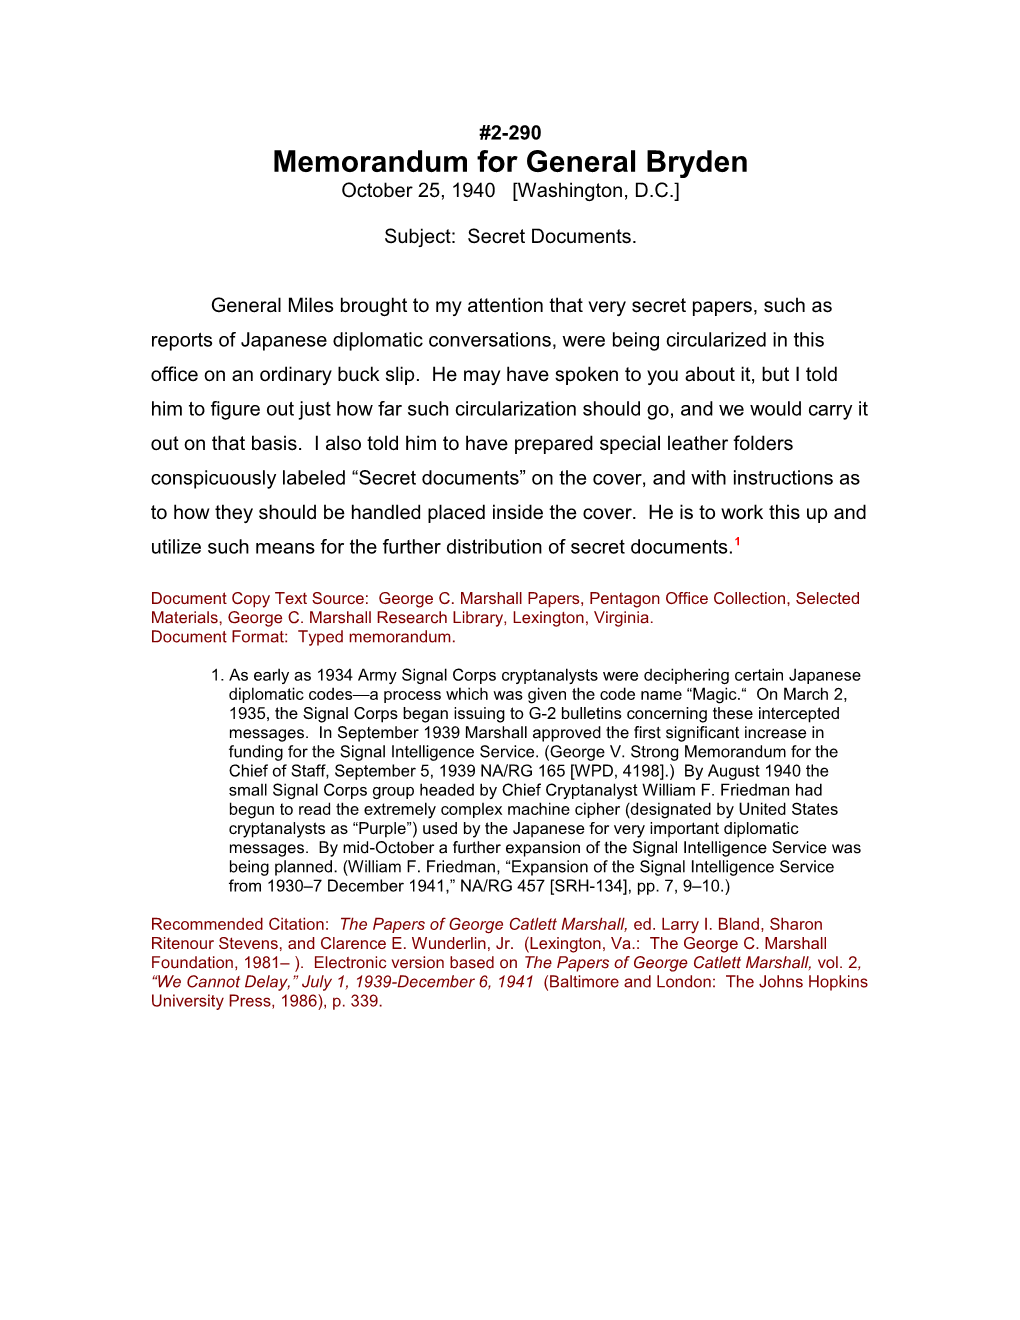 Memorandum for General Bryden